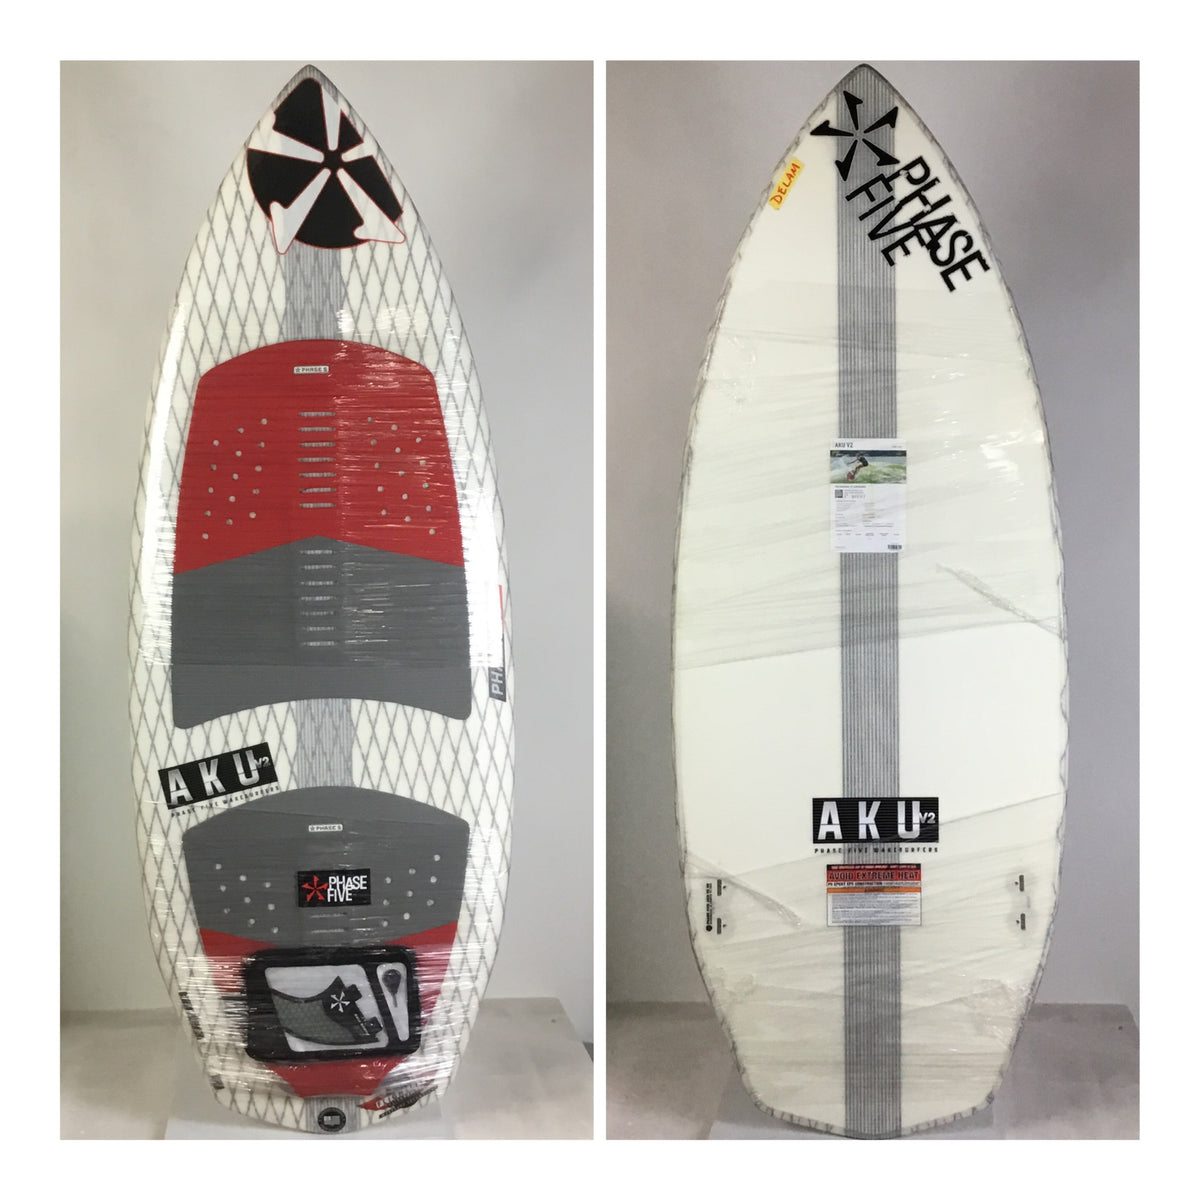 Phase Five Aku V2 BLEM Wake Surfboard 58”